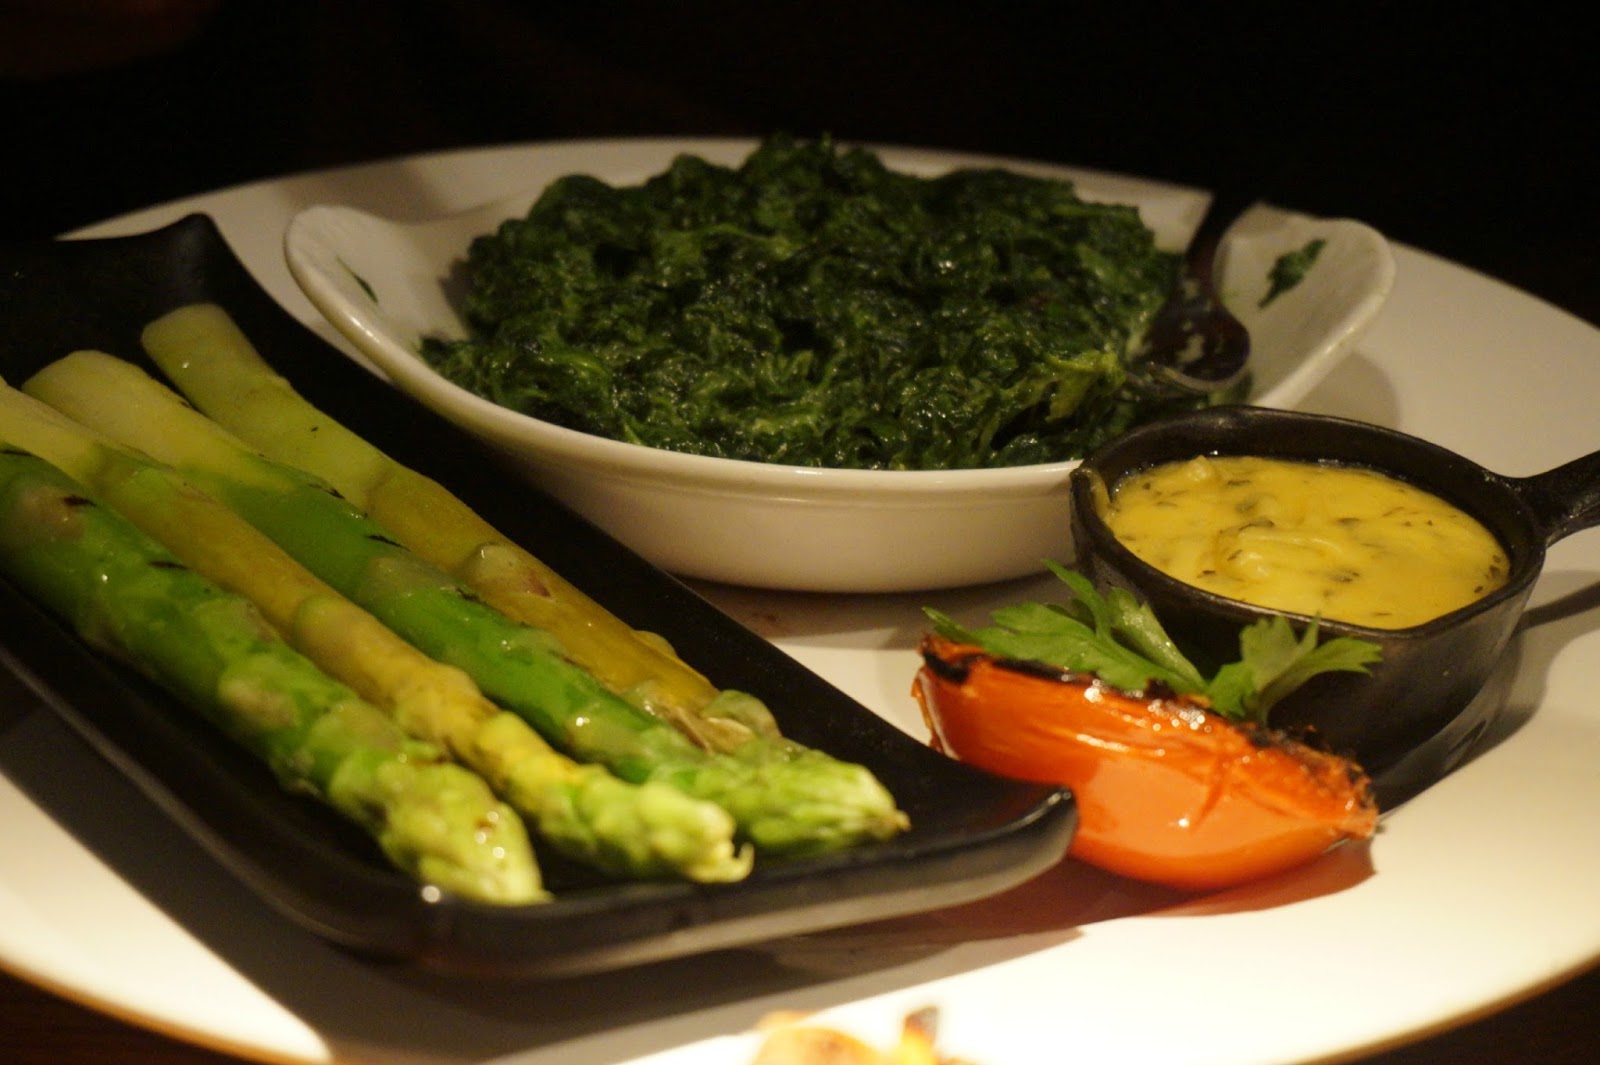 asparagus in bowl